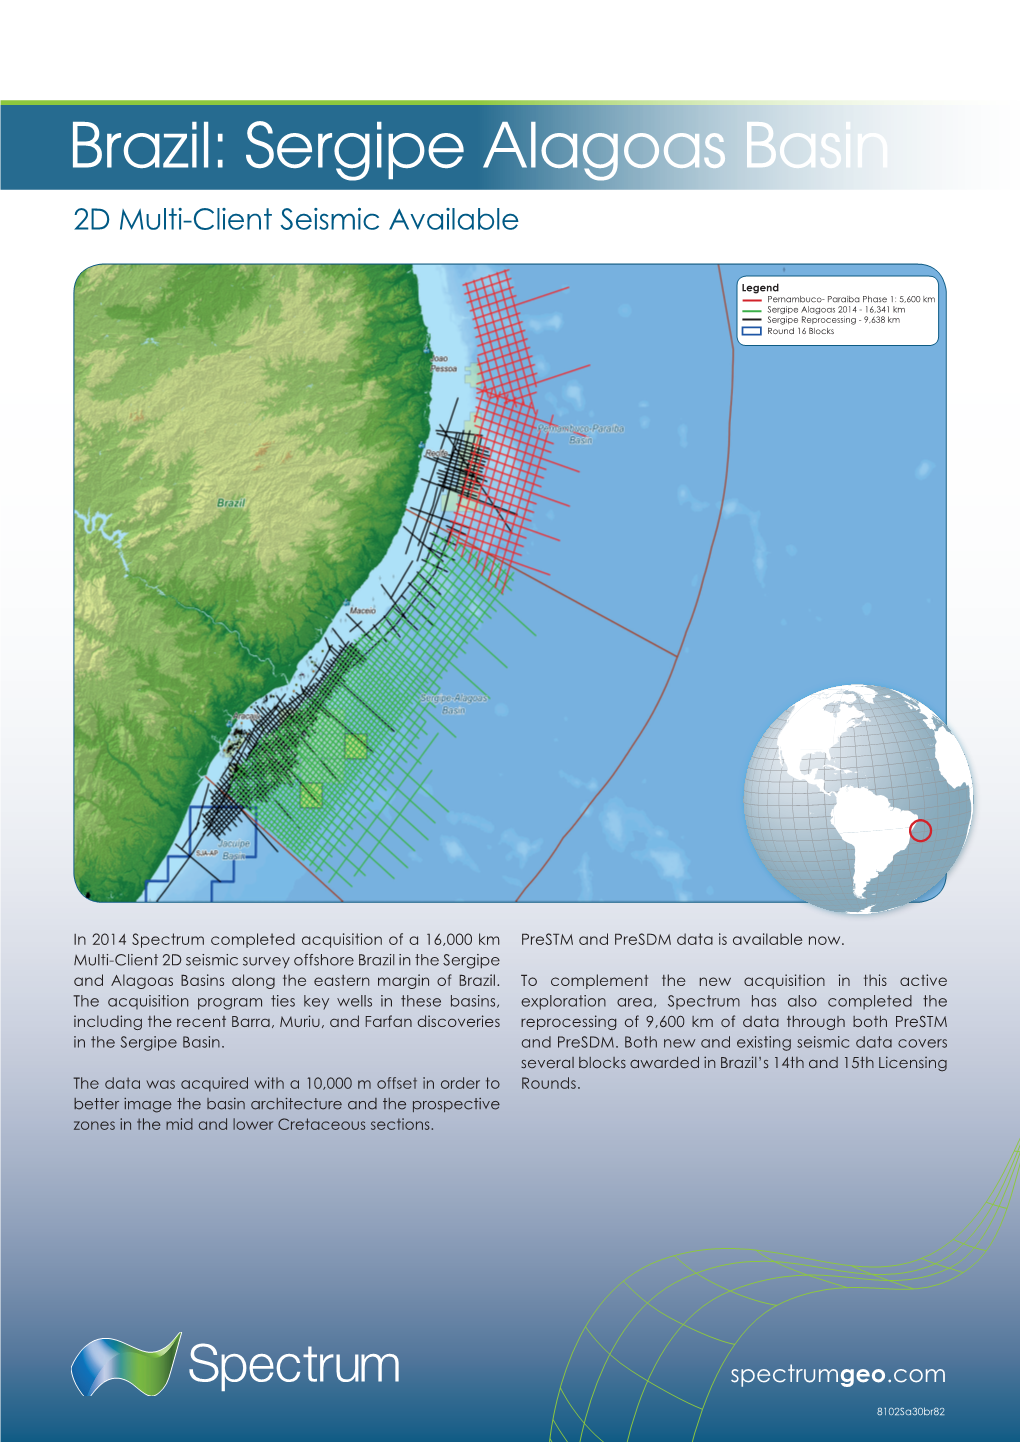 Sergipe Alagoas Basin 2D Multi-Client Seismic Available